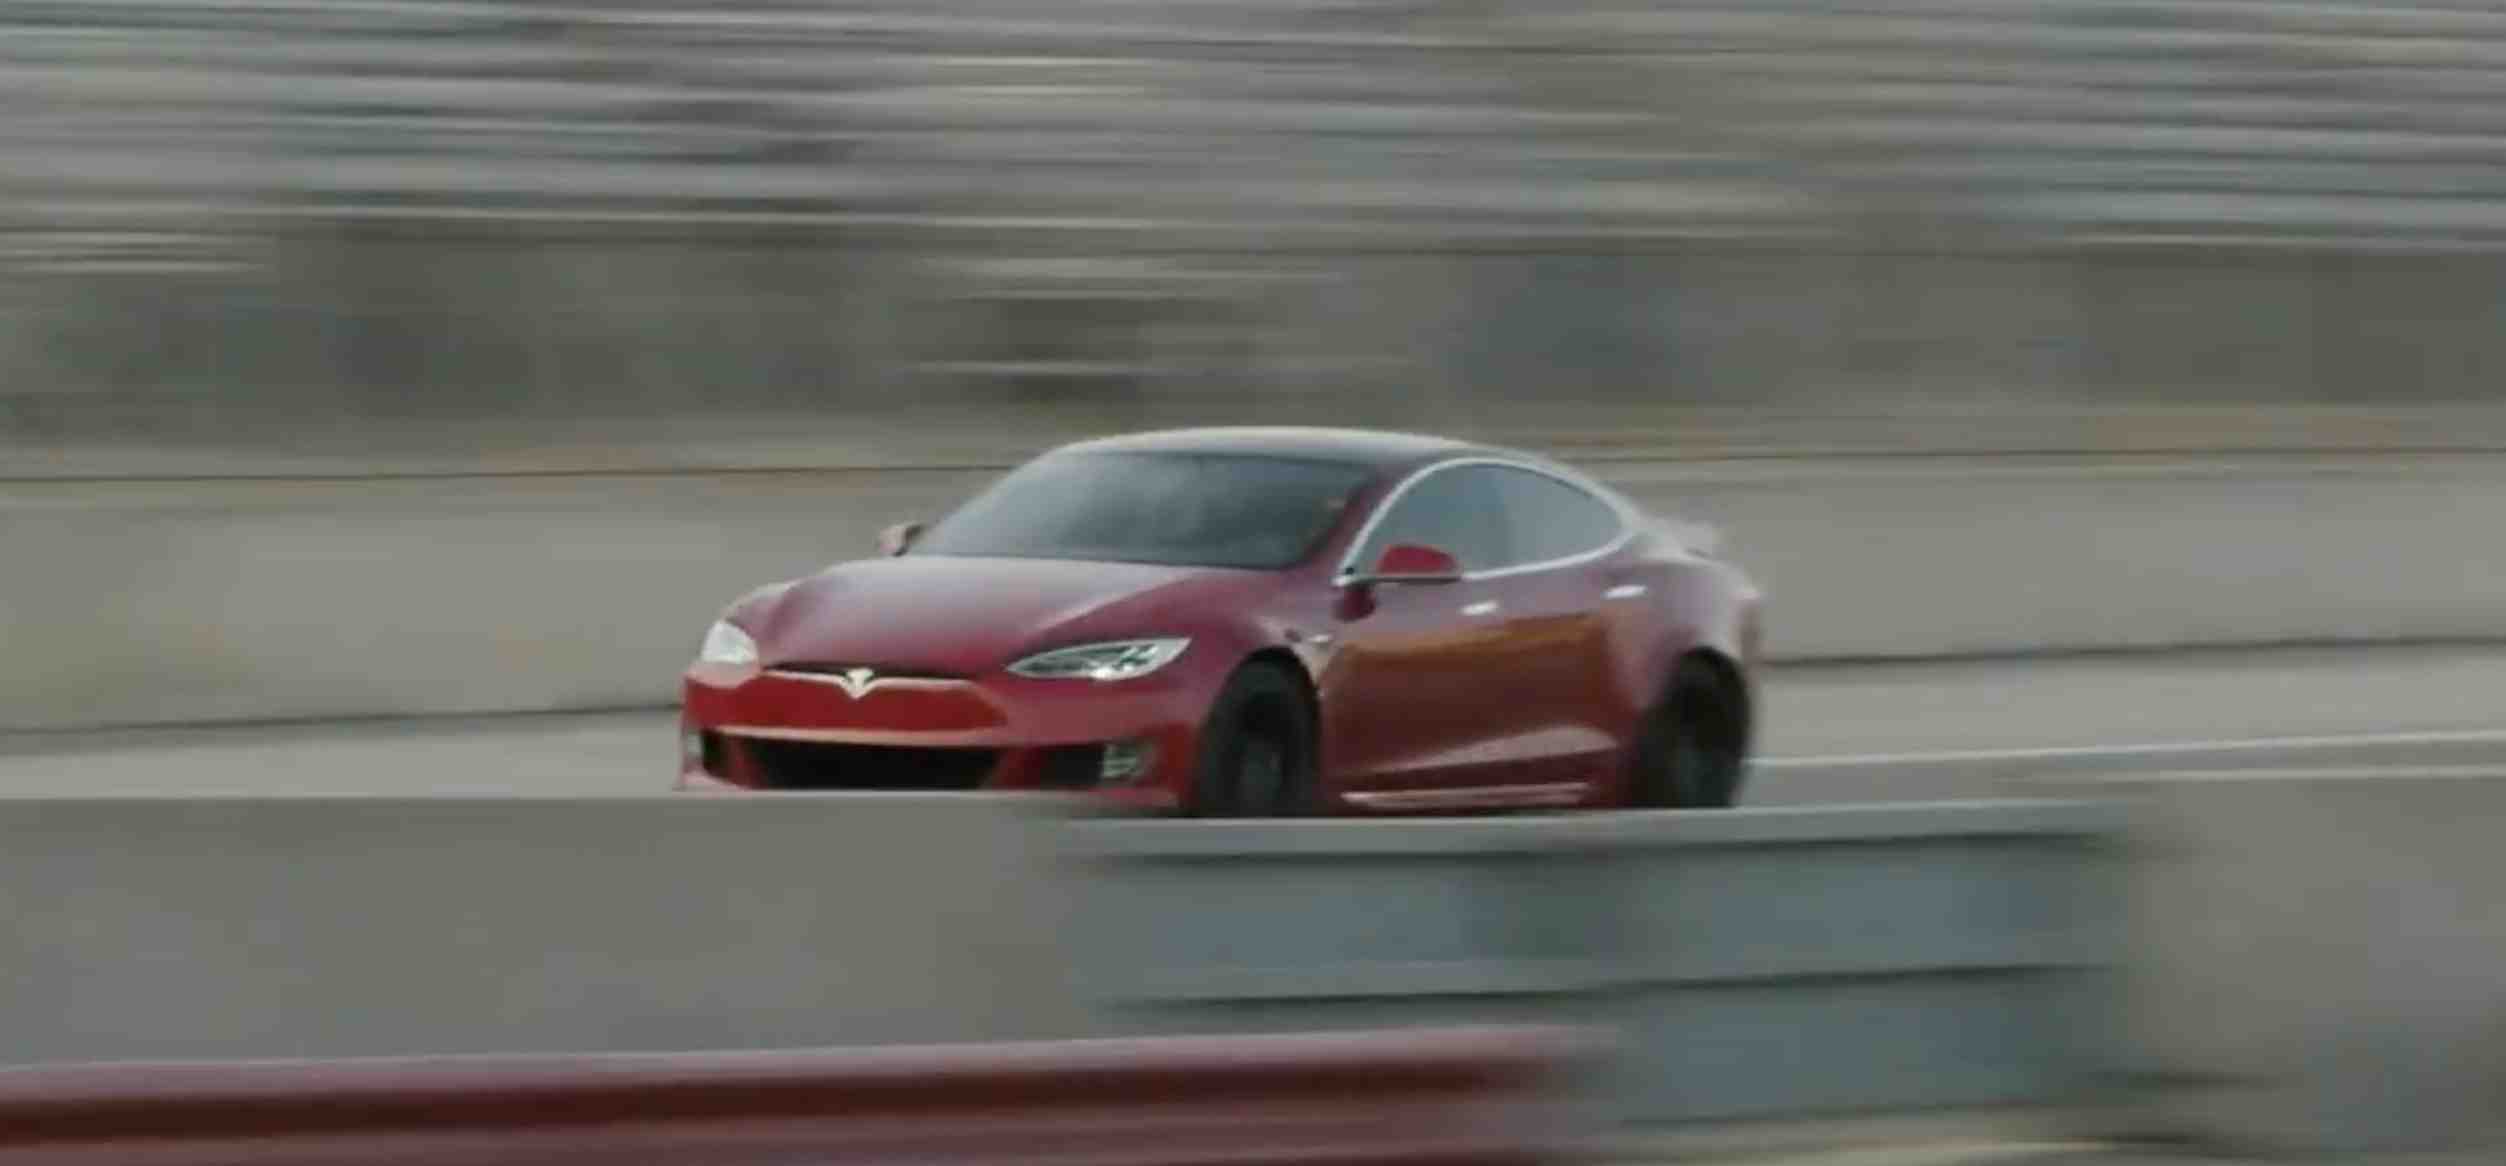 How far can a Tesla go on highway?